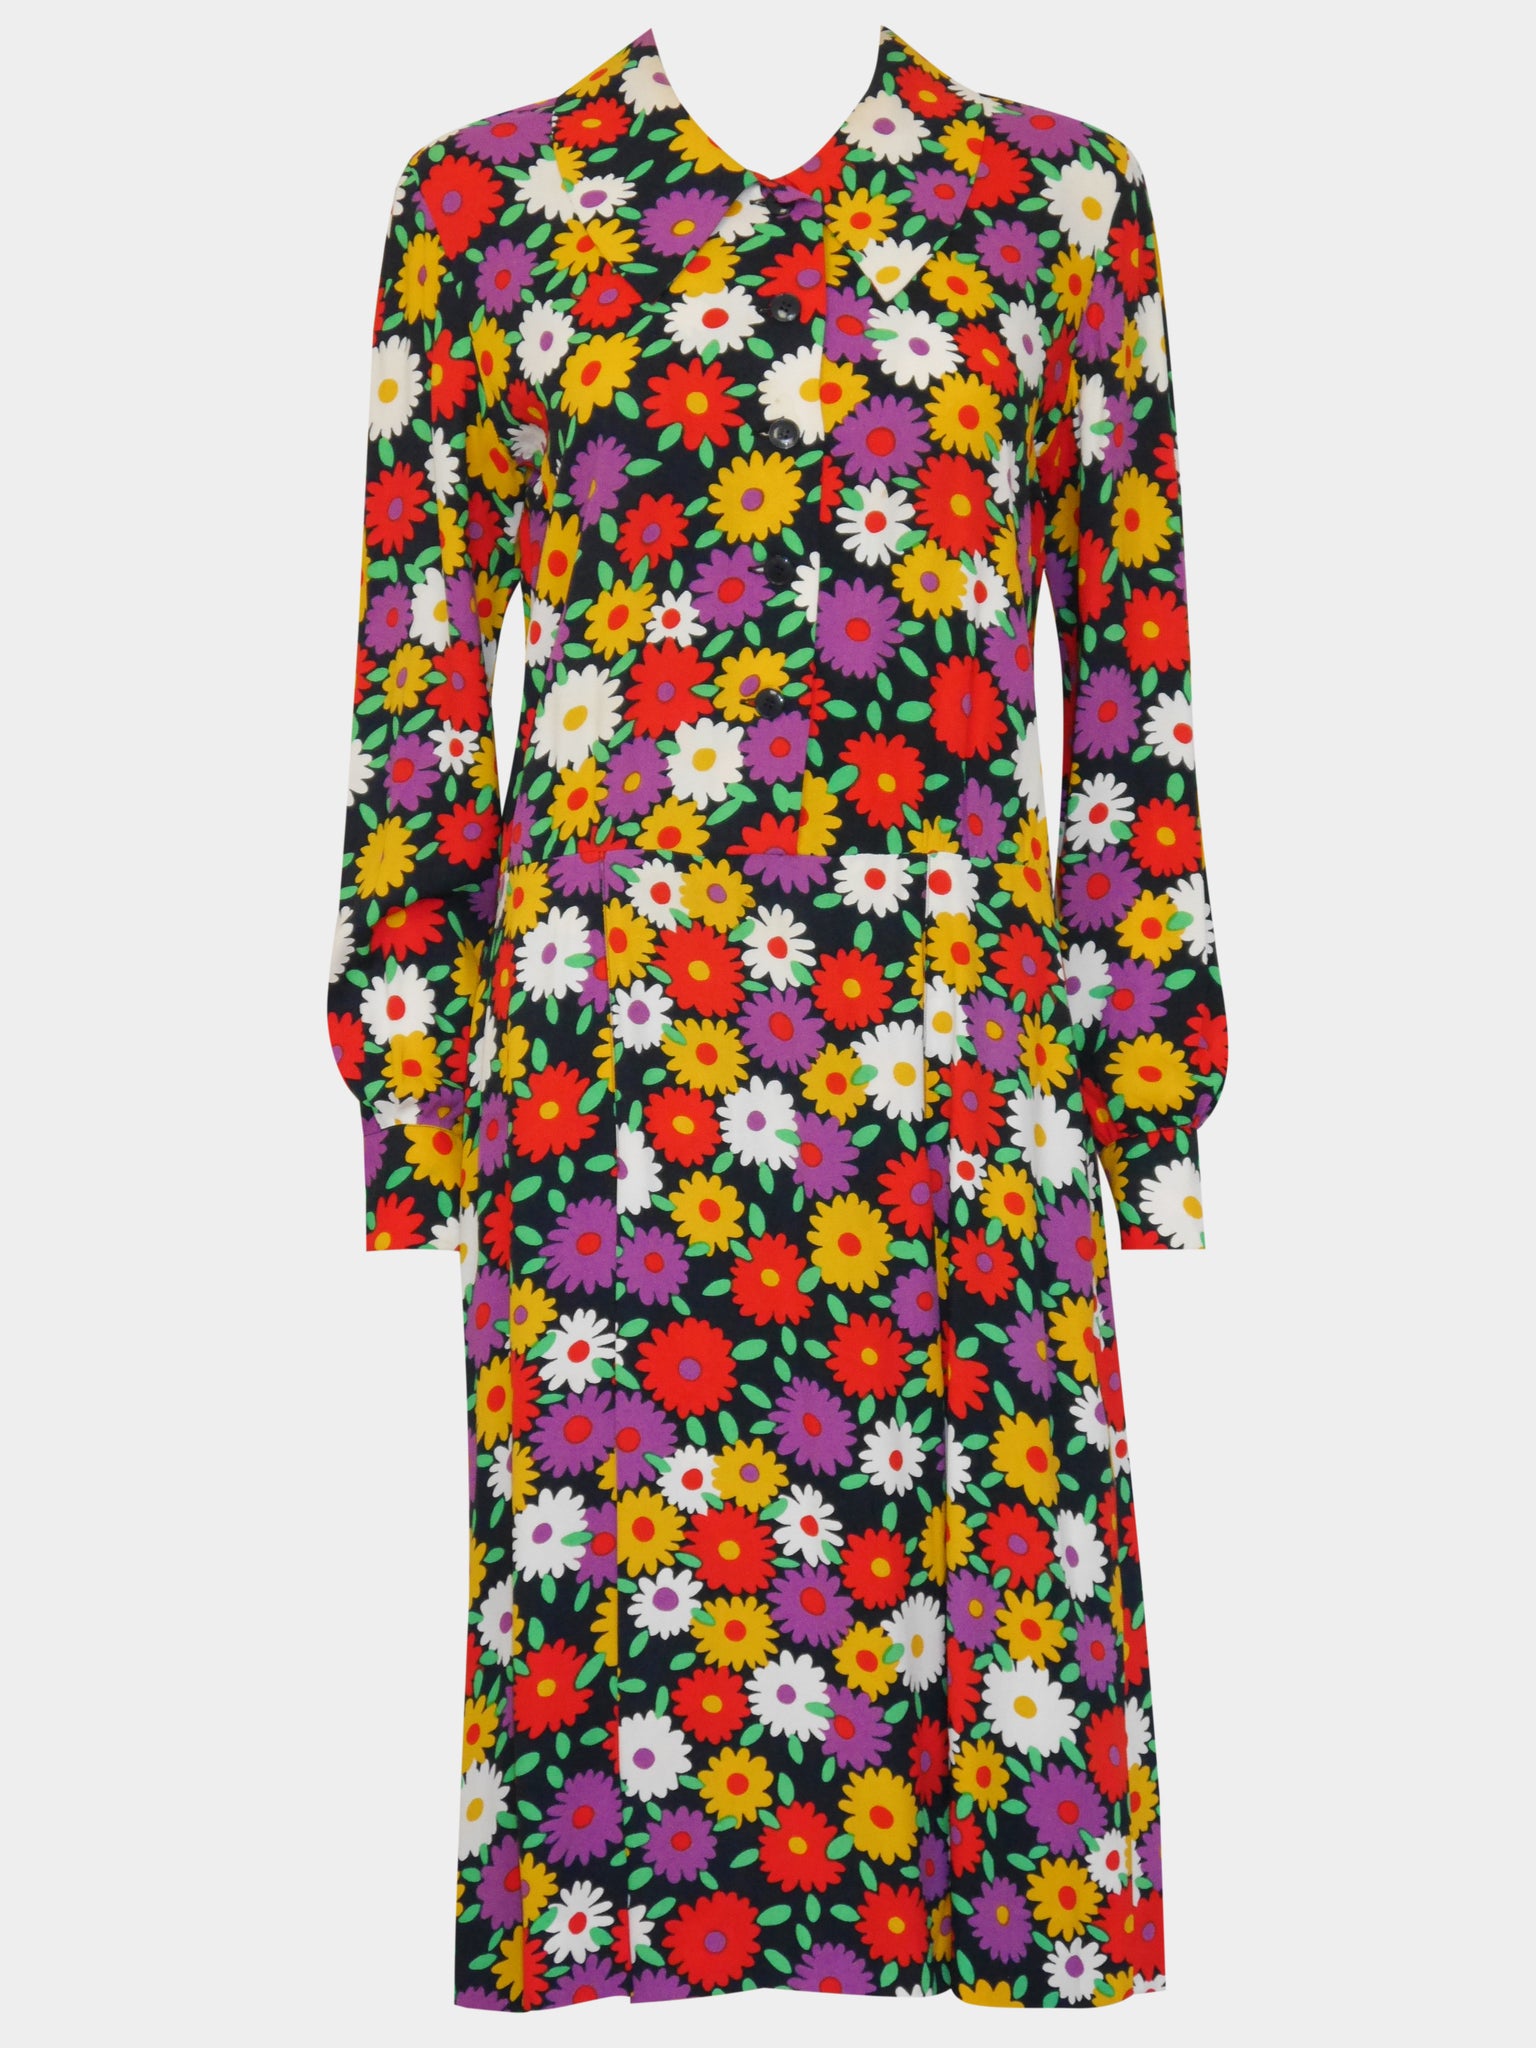 YVES SAINT LAURENT c. 1974 Vintage Documented Floral Midi Dress